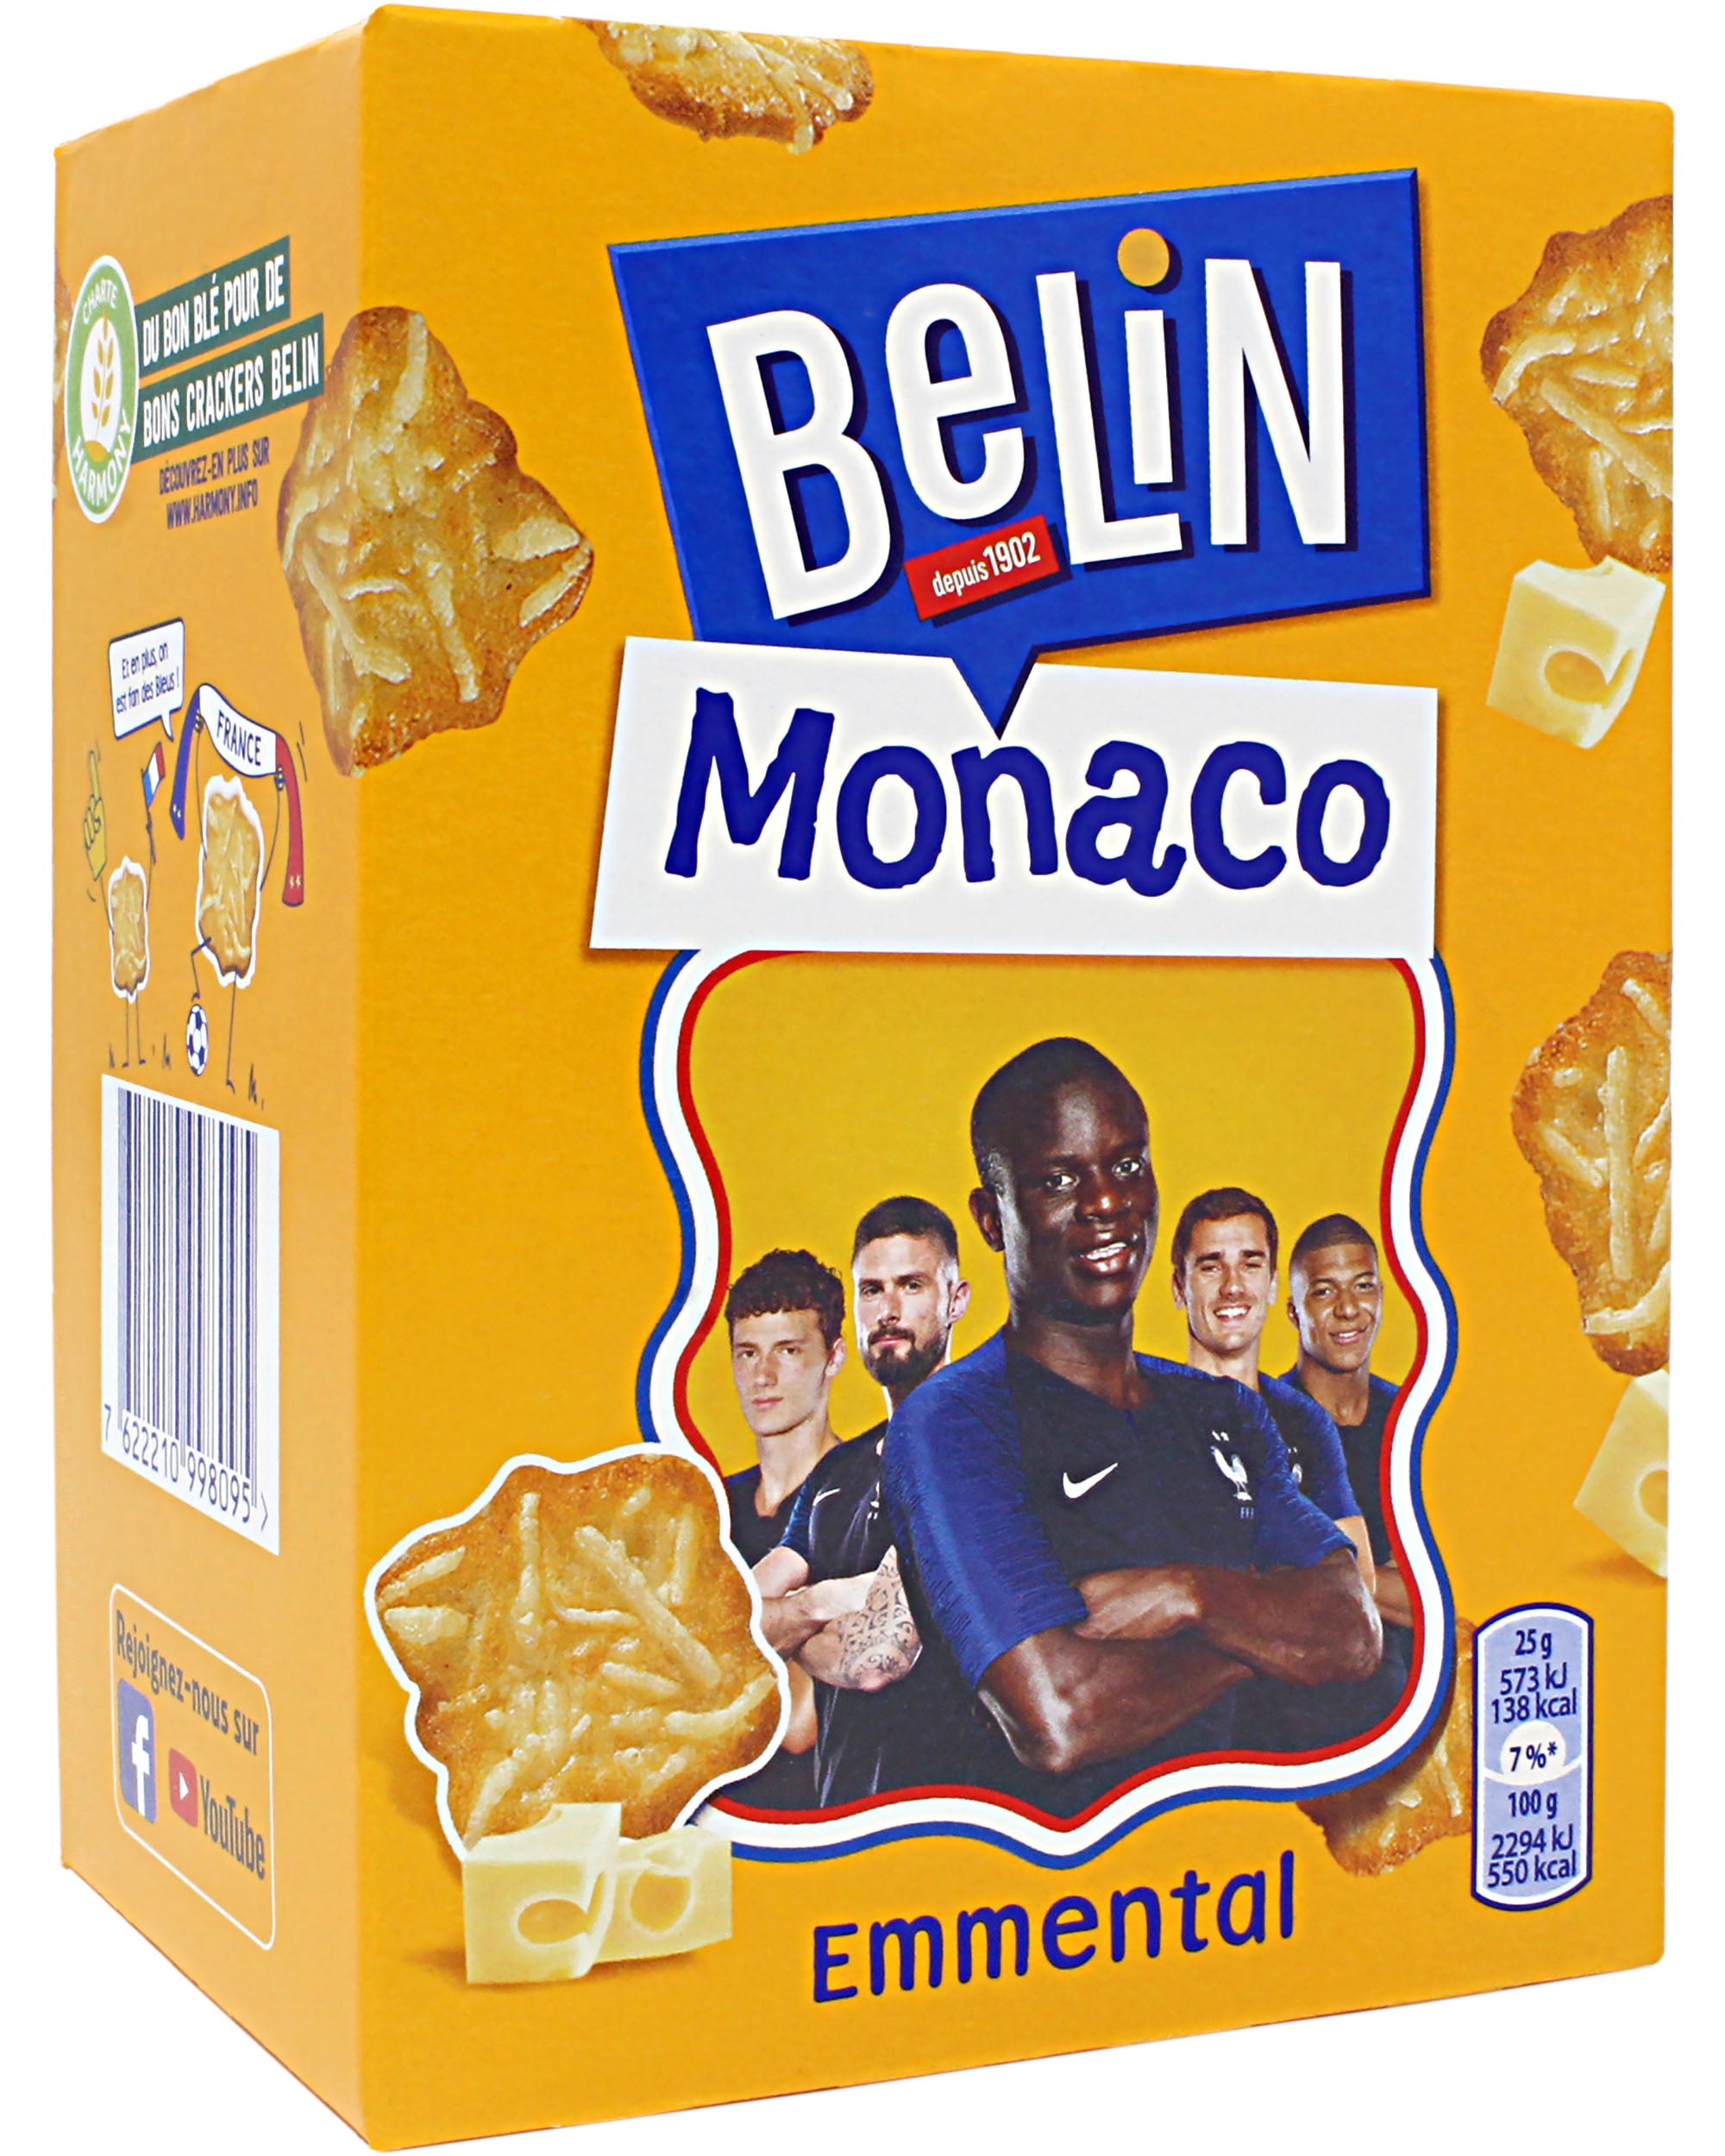 Belin Monaco Emmental Crackers - 3.5 oz / 100 g